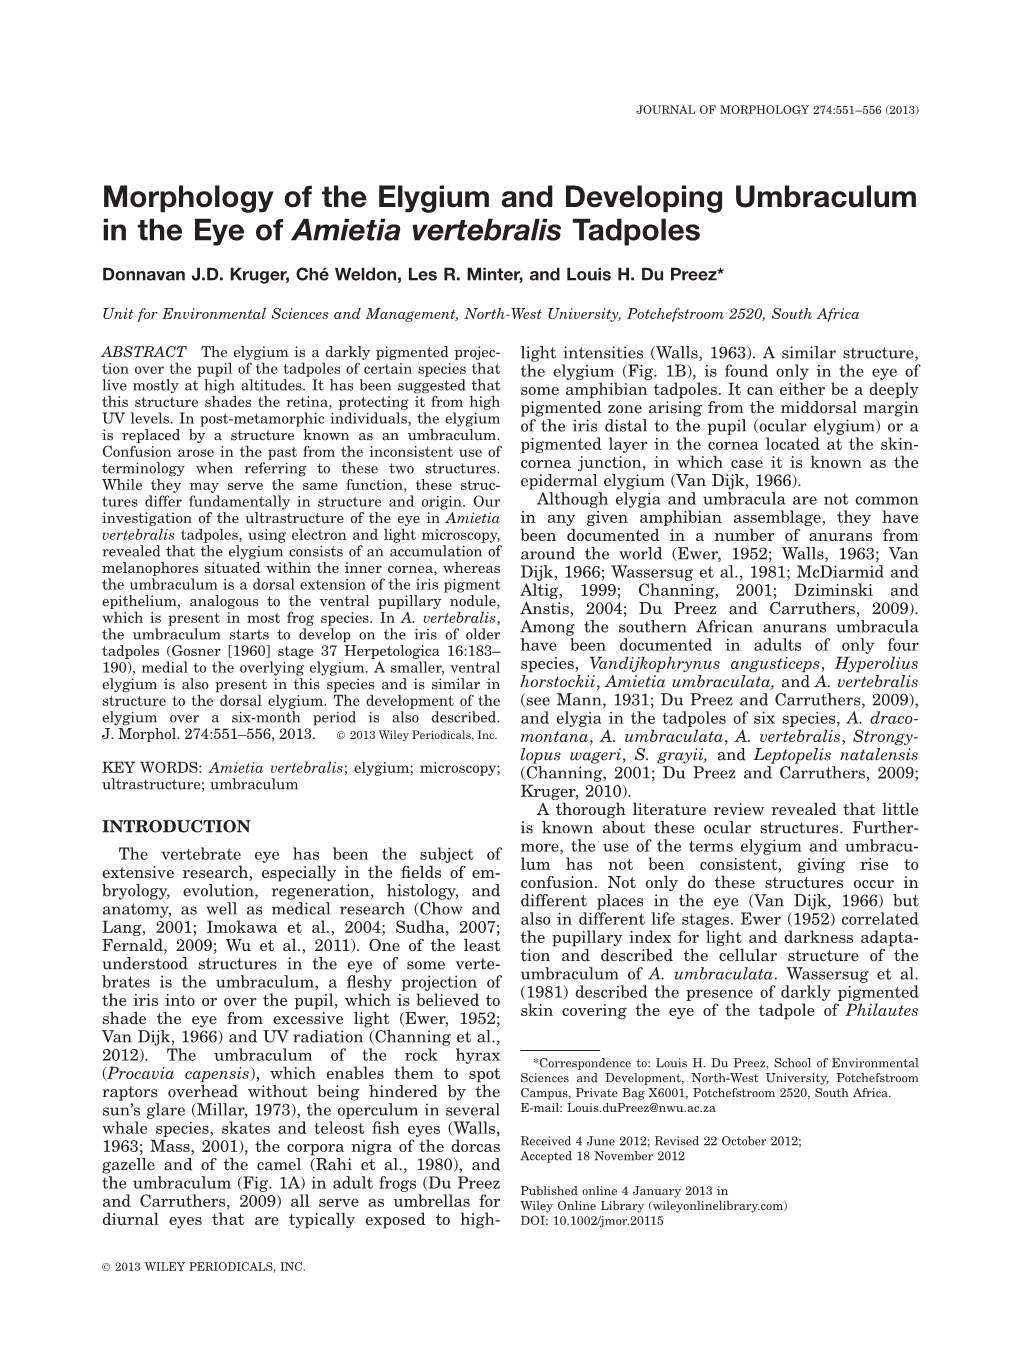 Morphology of the Elygium and Developing Umbraculum in the Eye of Amietia Vertebralis Tadpoles